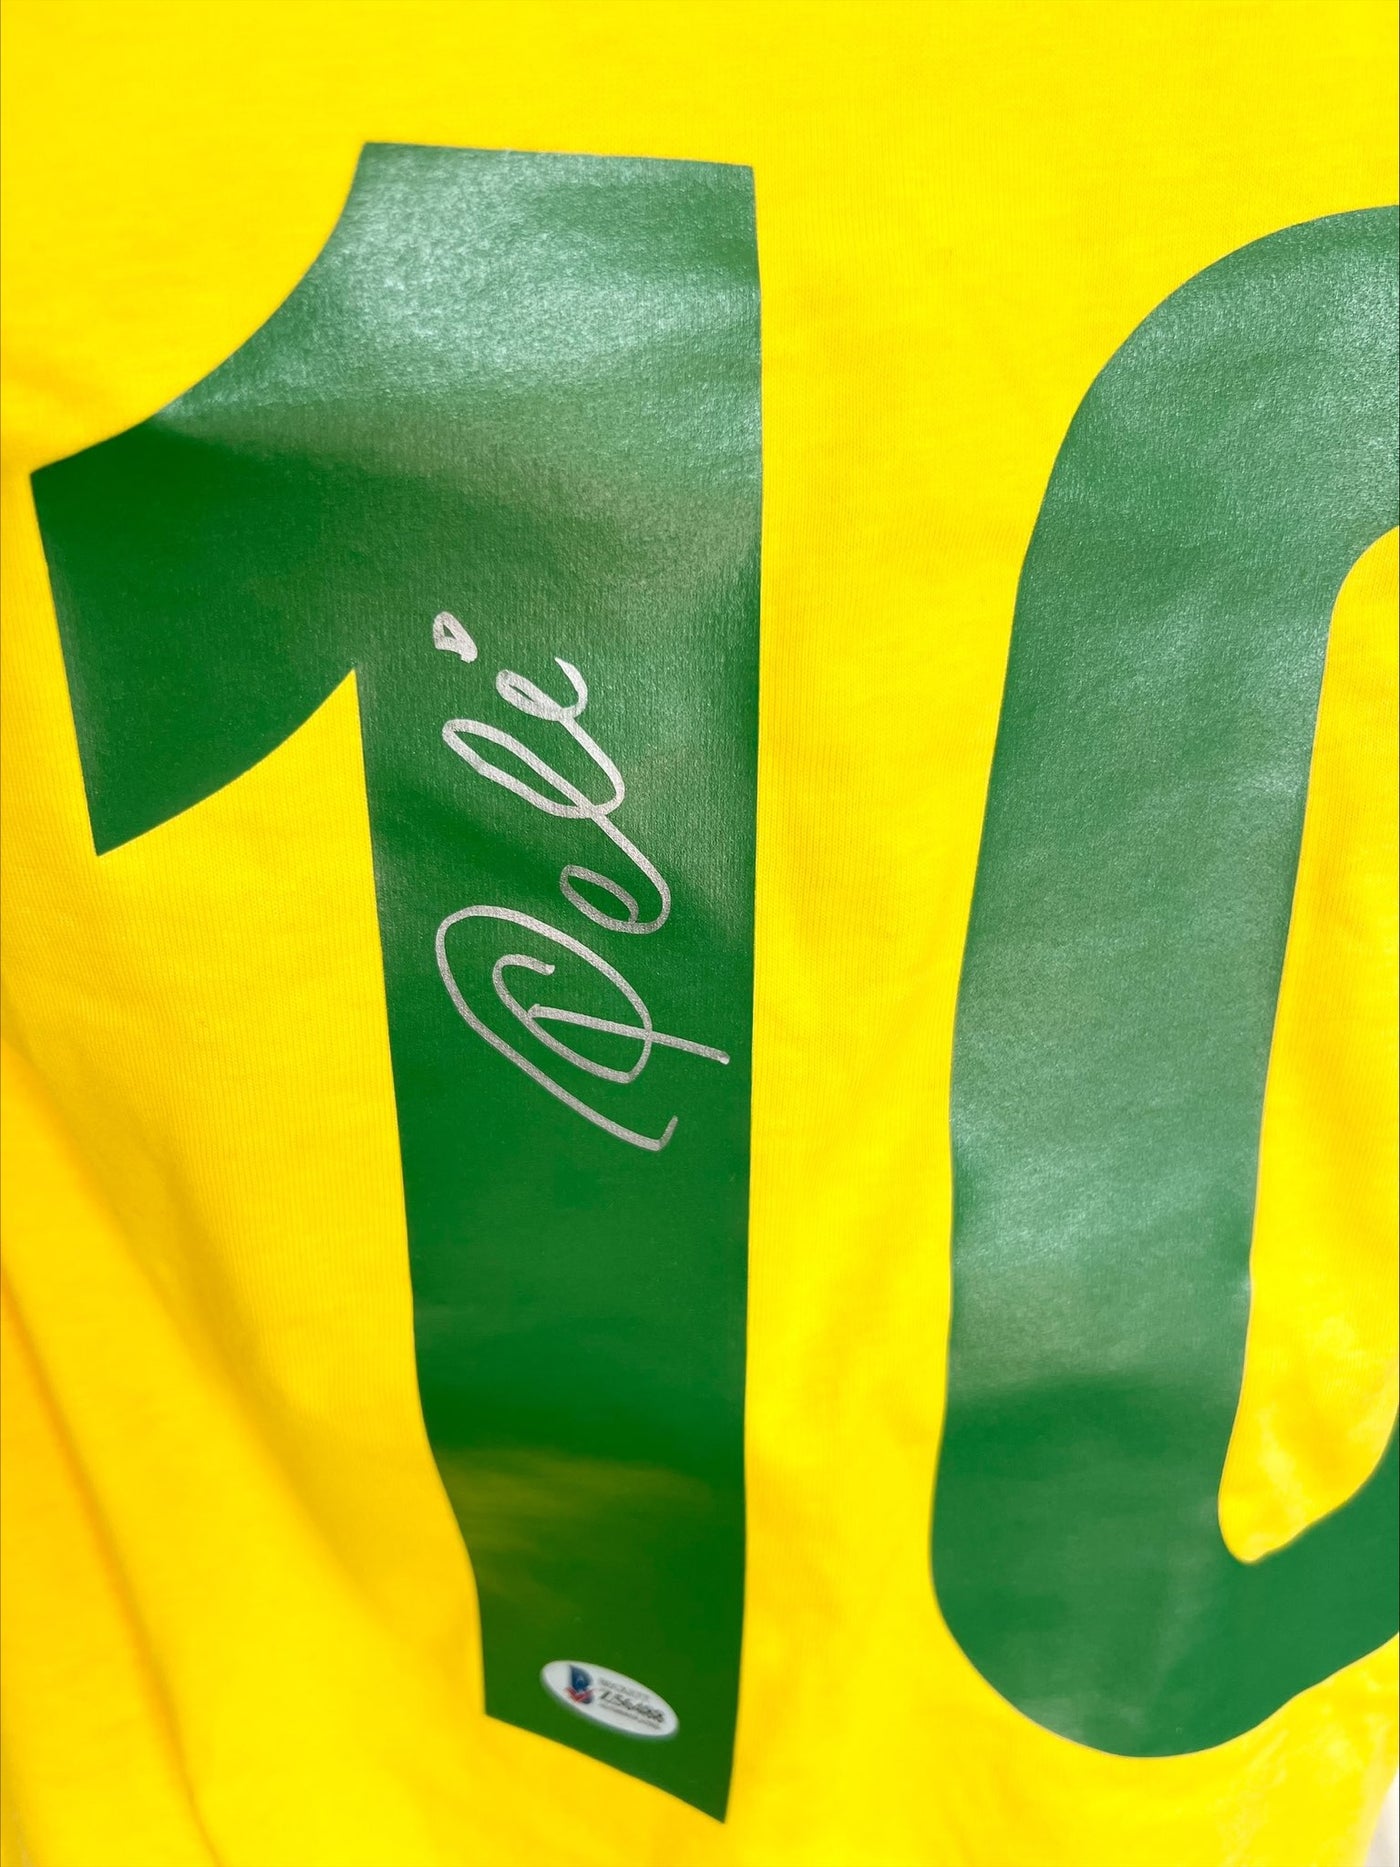 Pele Signed Autographed Brazil Soccer Jersey